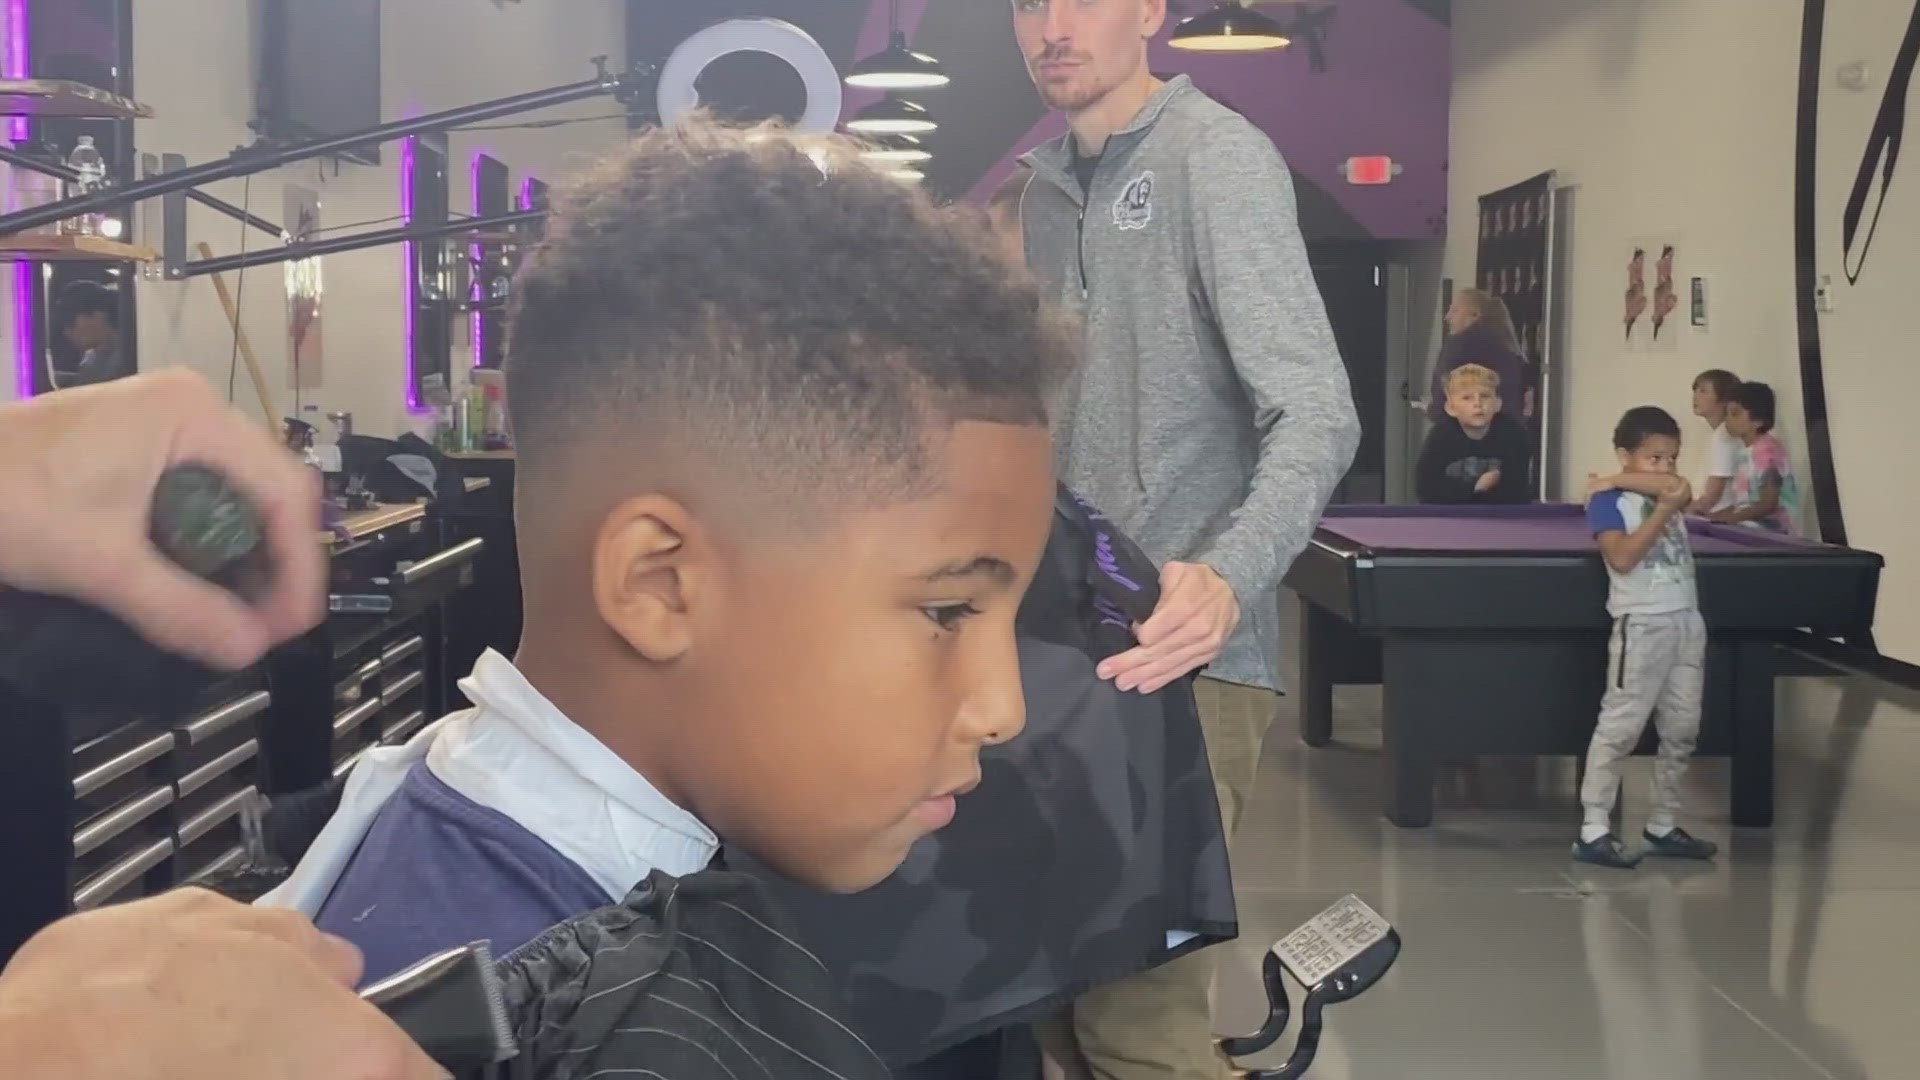 Nealy 150 kids got free haircuts in Auburn Monday before starting school.